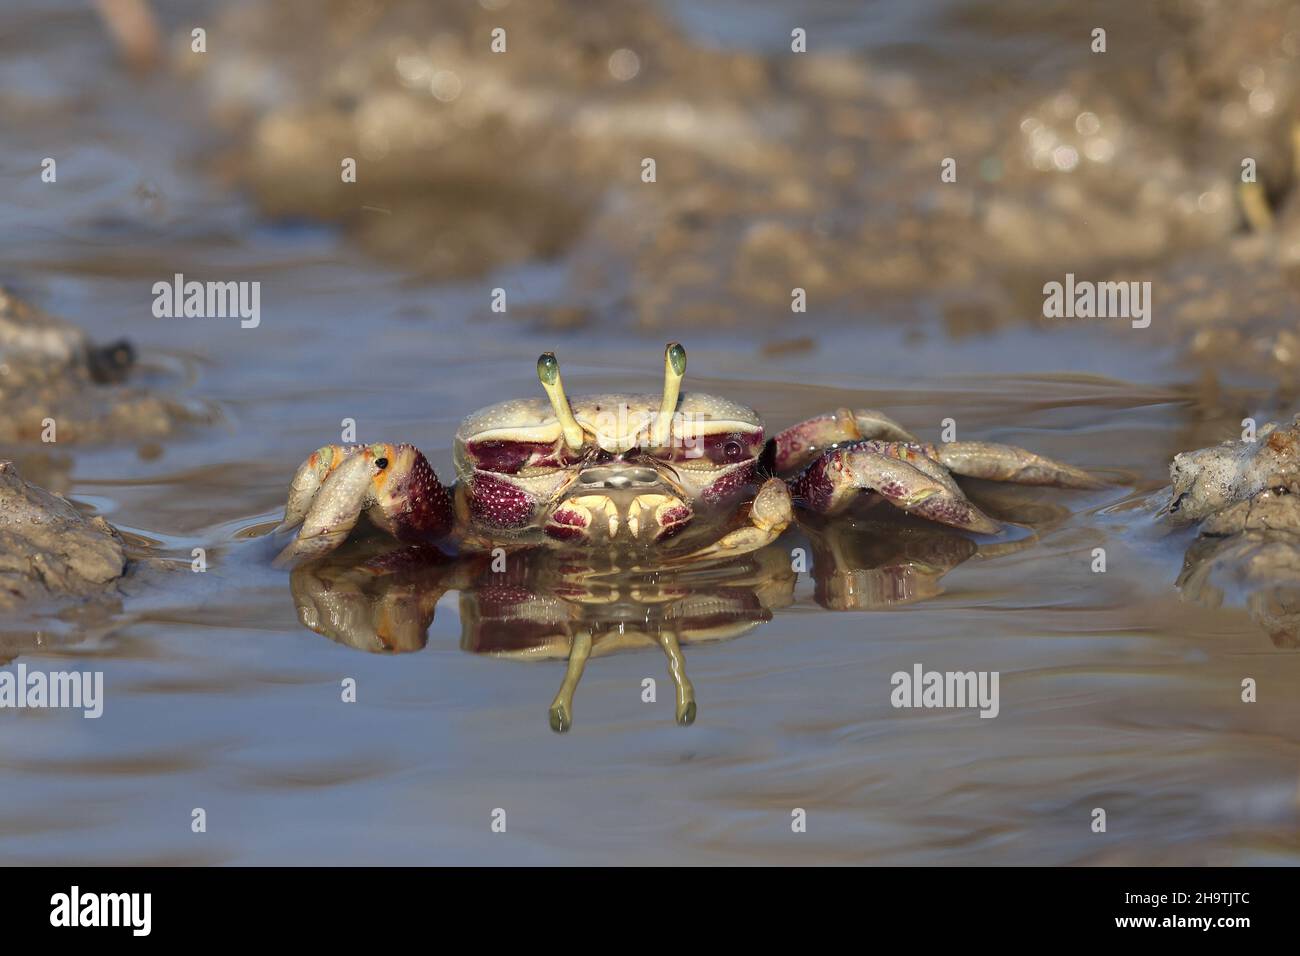 Crabe fiddler marocain, crabe fiddler européen (Uca tangeri), femme assise en eau peu profonde, vue de face, Espagne, Andalousie, Sanlucar de Barrameda Banque D'Images